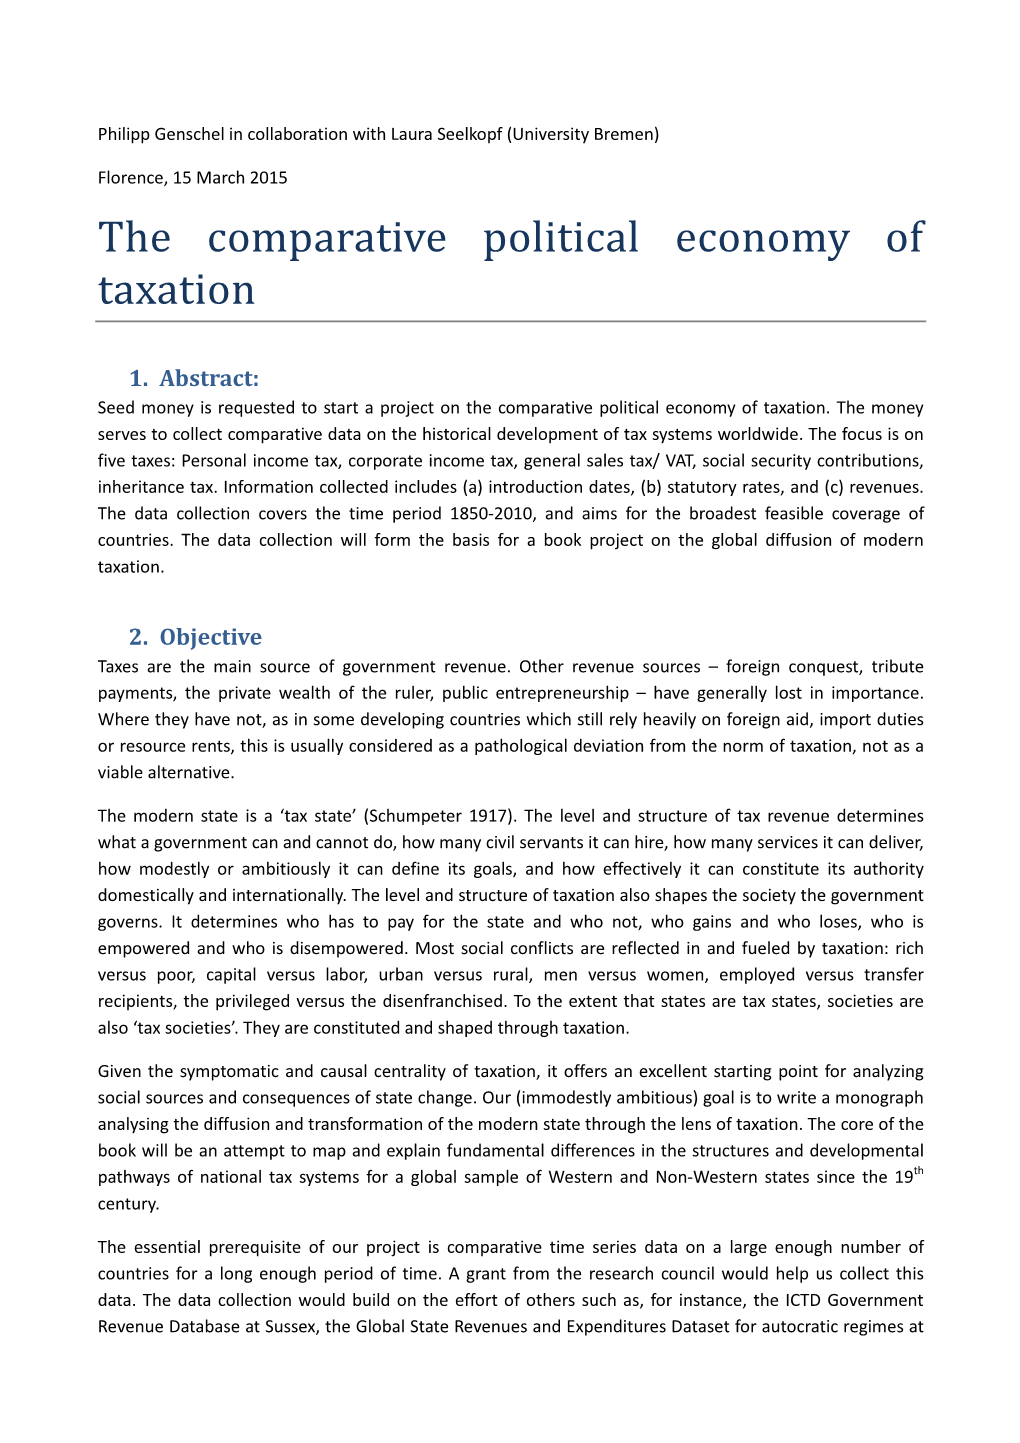 Comparative Political Economy of Taxation